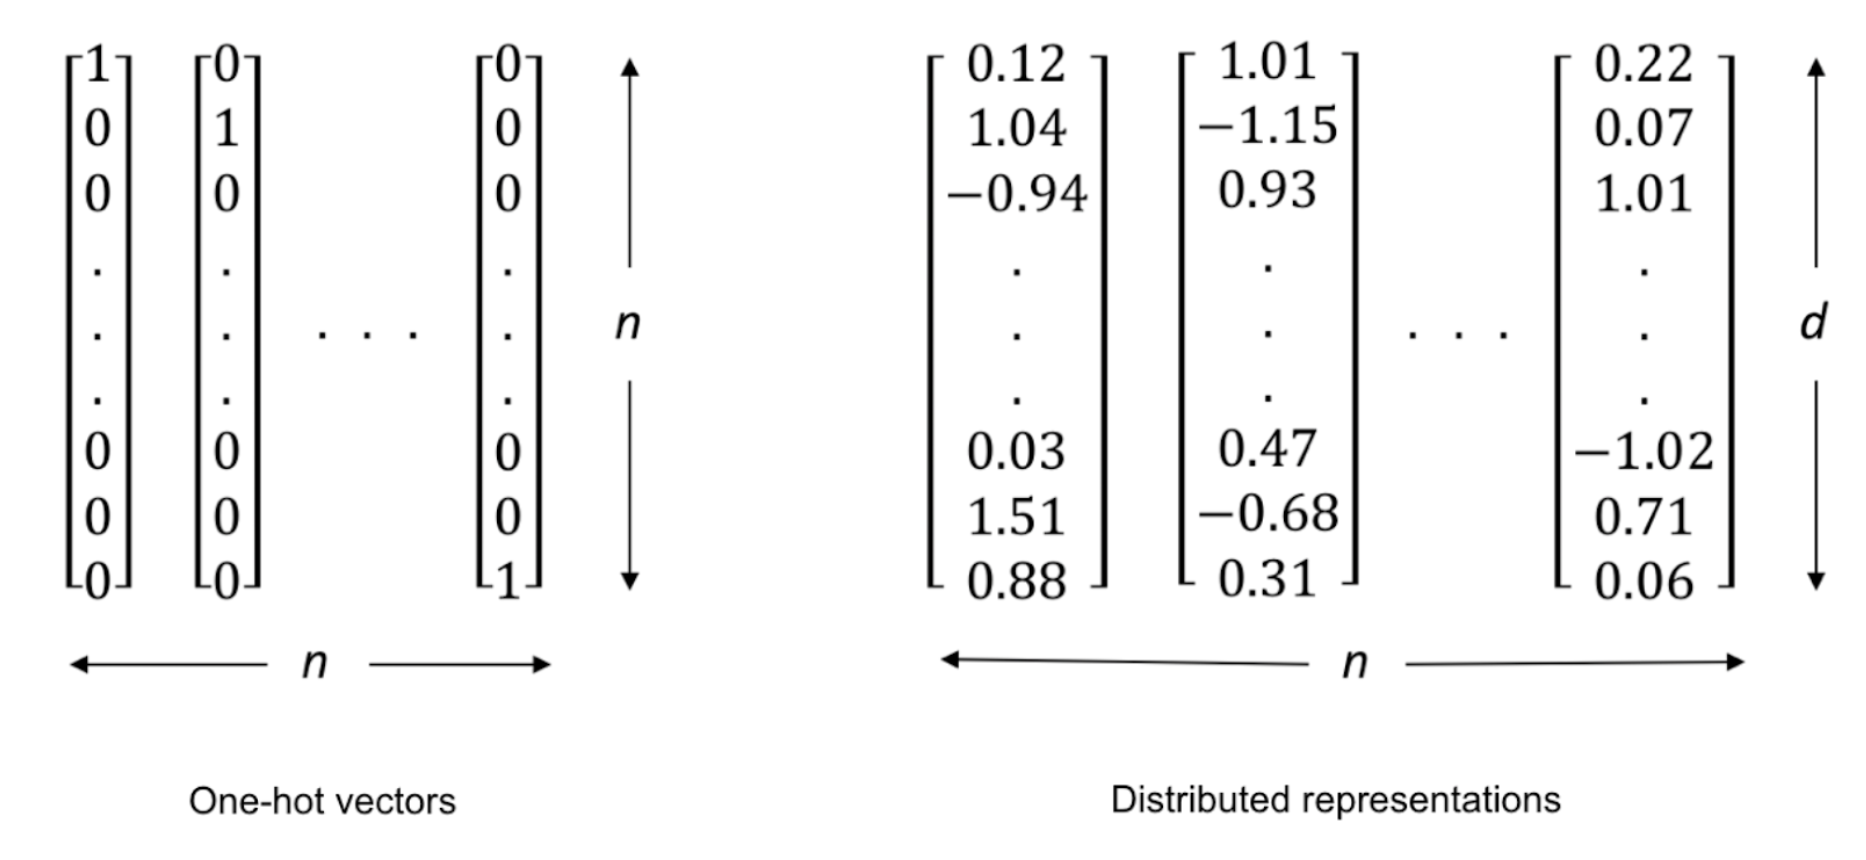 local vs. distributed representations